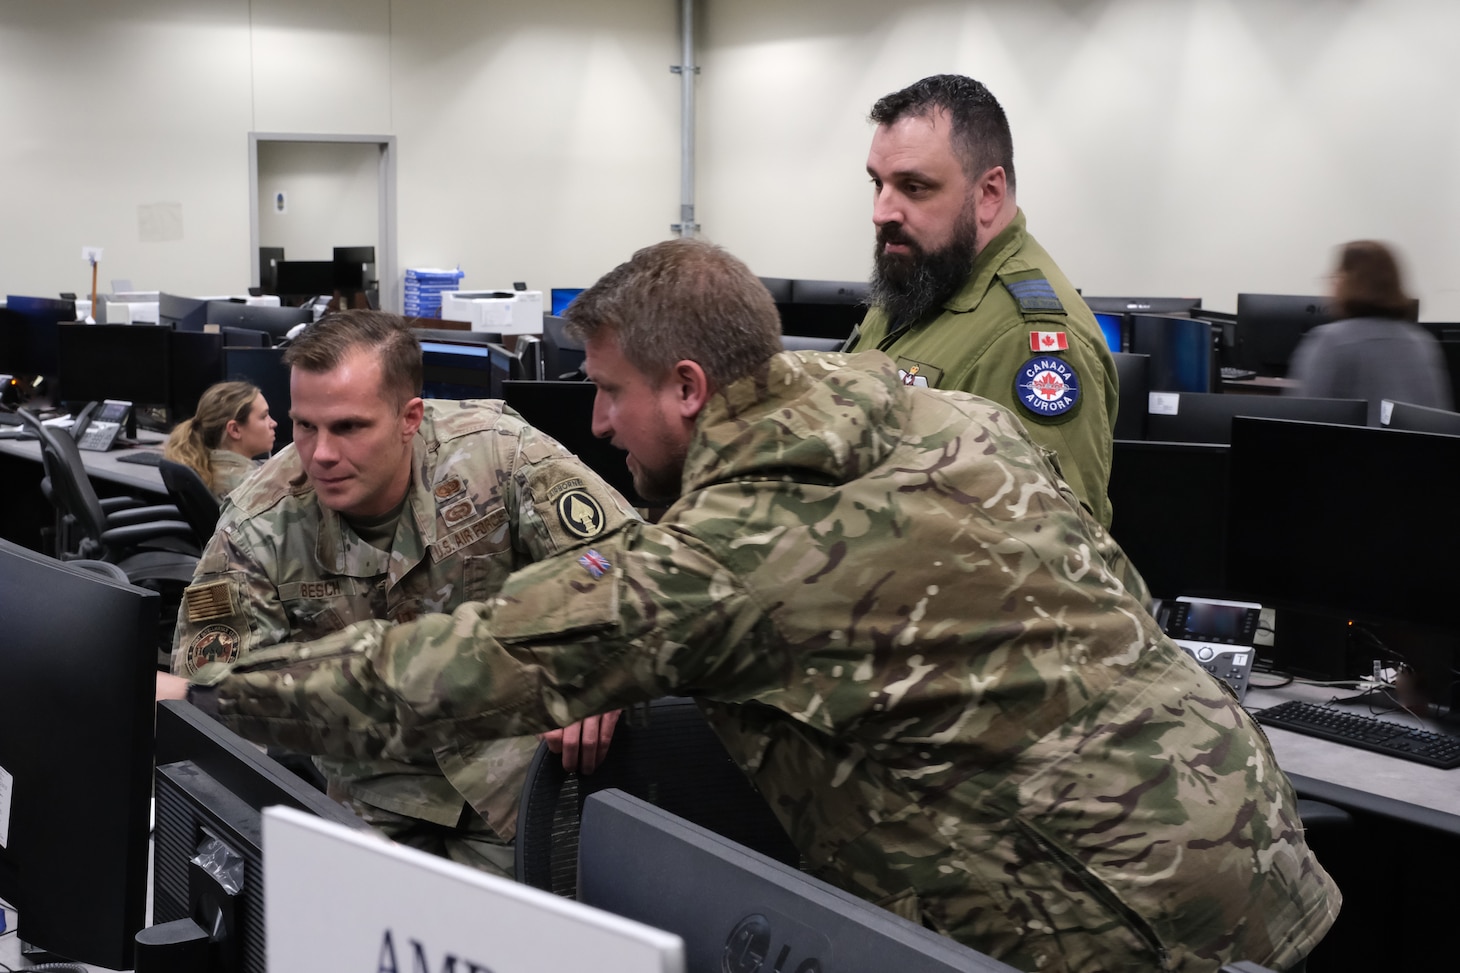 uniformed U.S. U.K, and Canadian military members working at computers